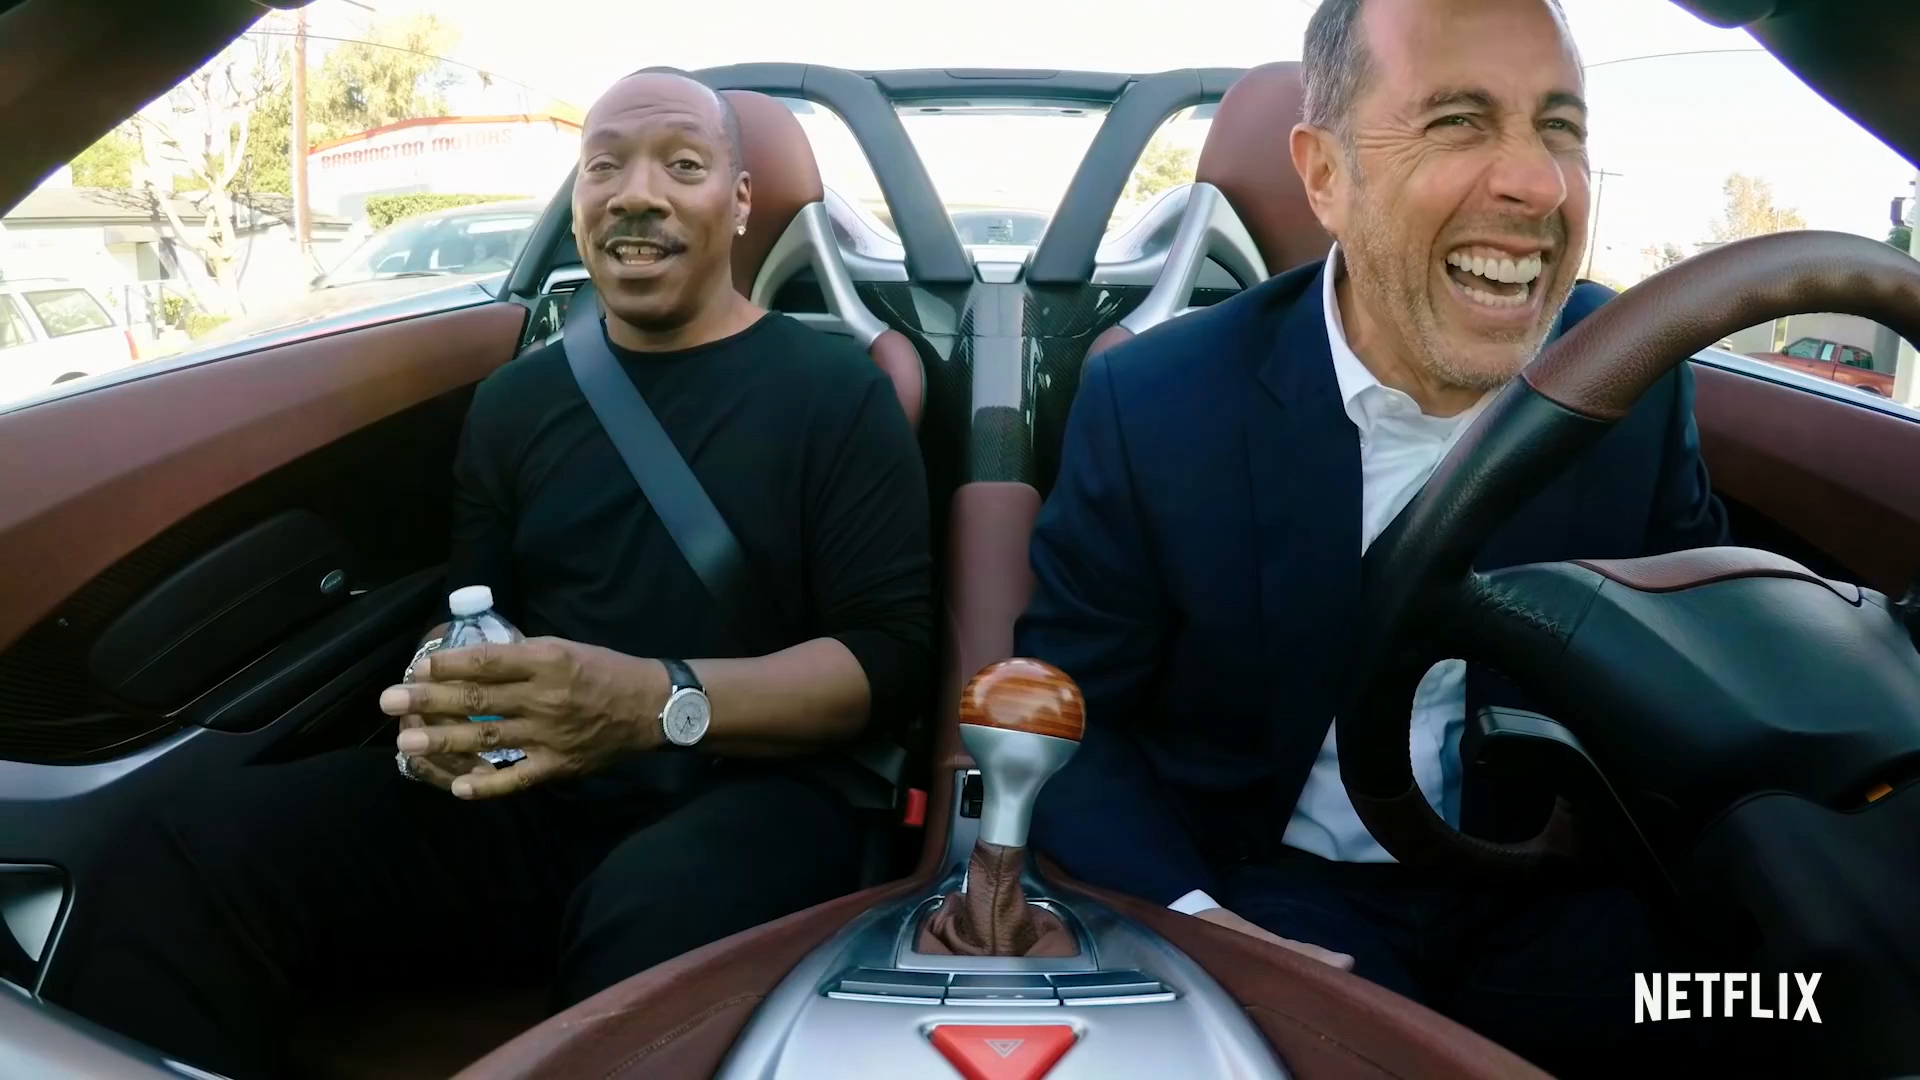 Comedians in Cars Getting Coffee (Season 2) / Comedians in Cars Getting Coffee (Season 2) (2012)